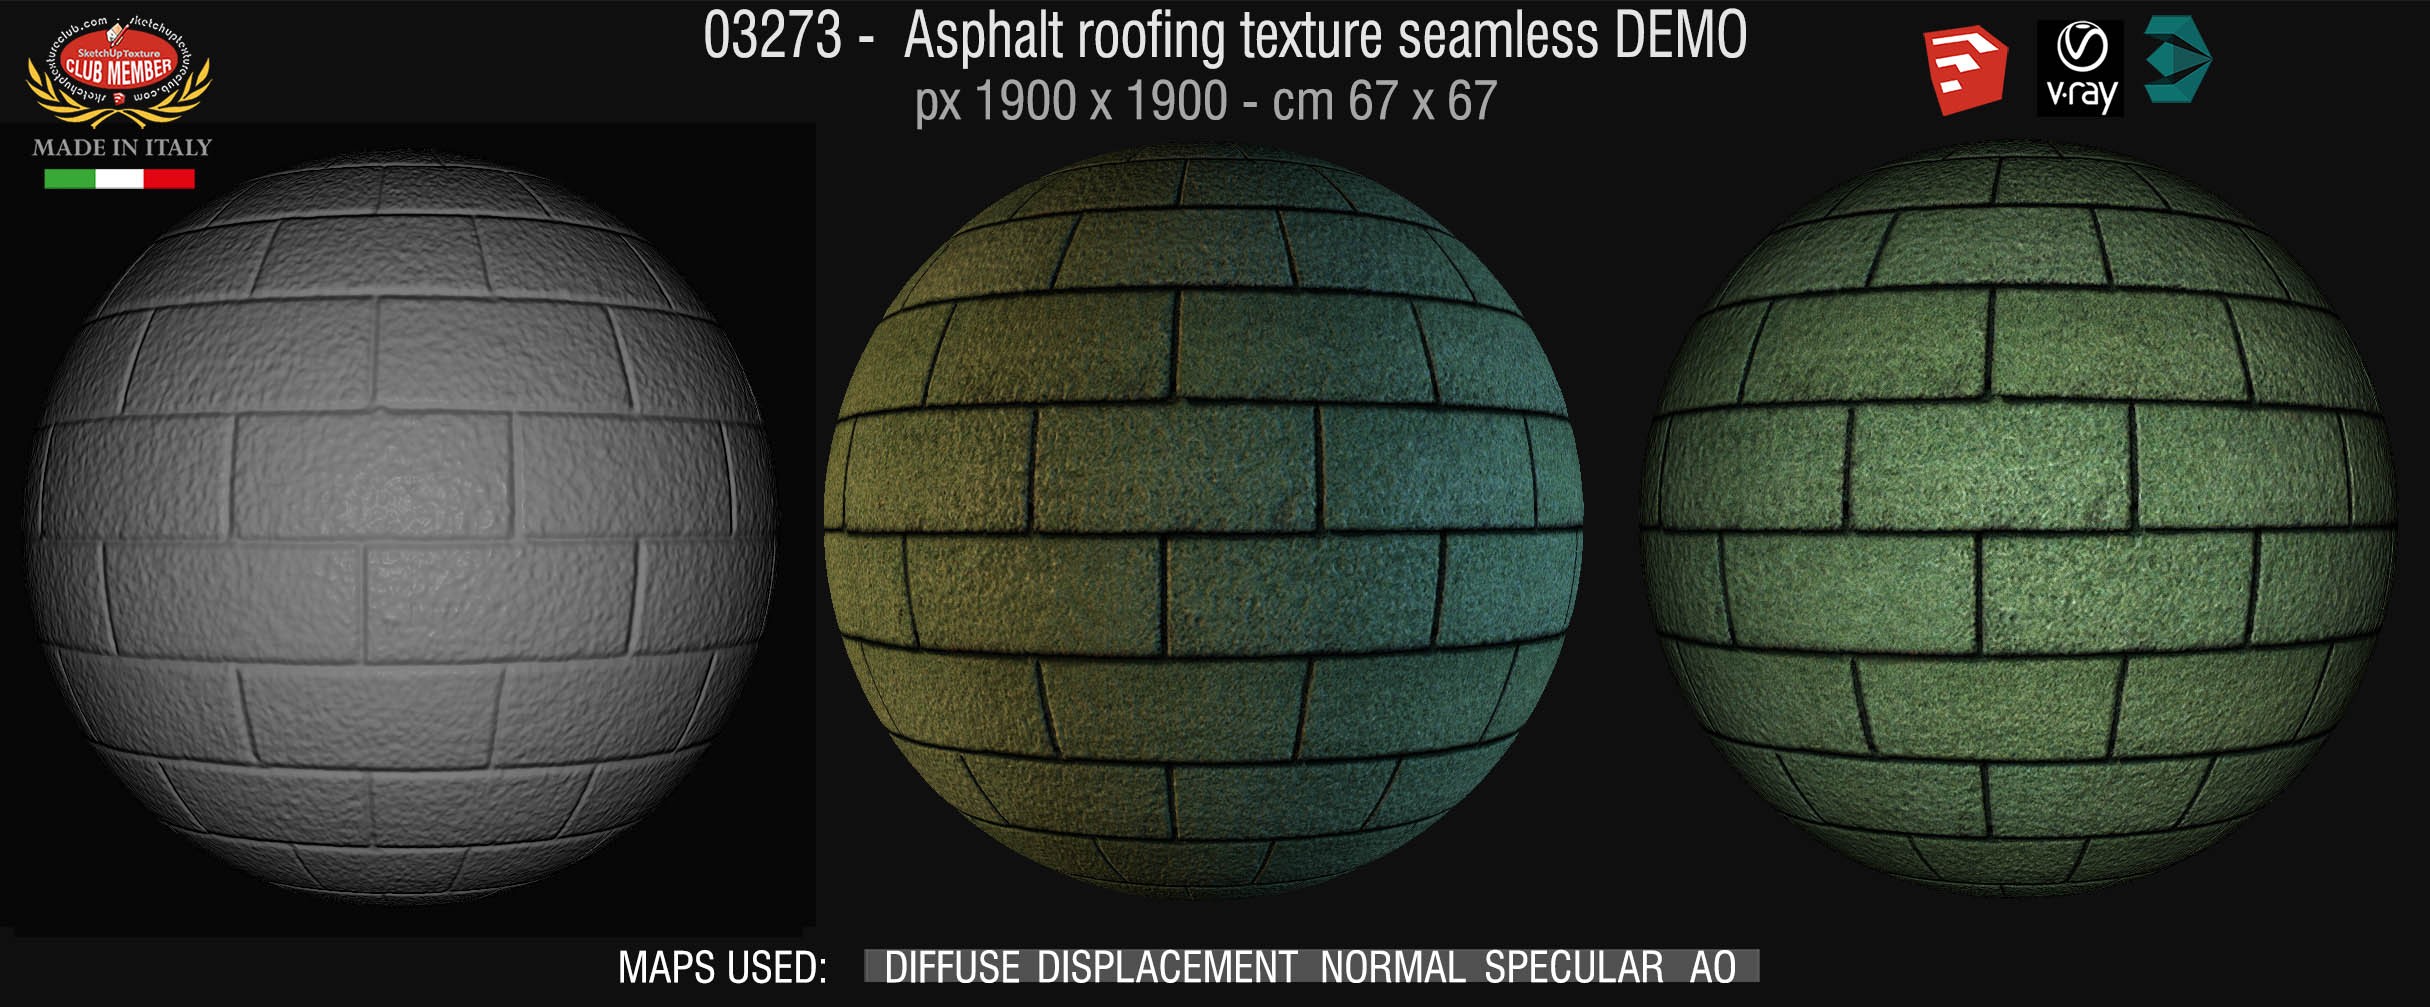 03273 Asphalt roofing texture + maps DEMO